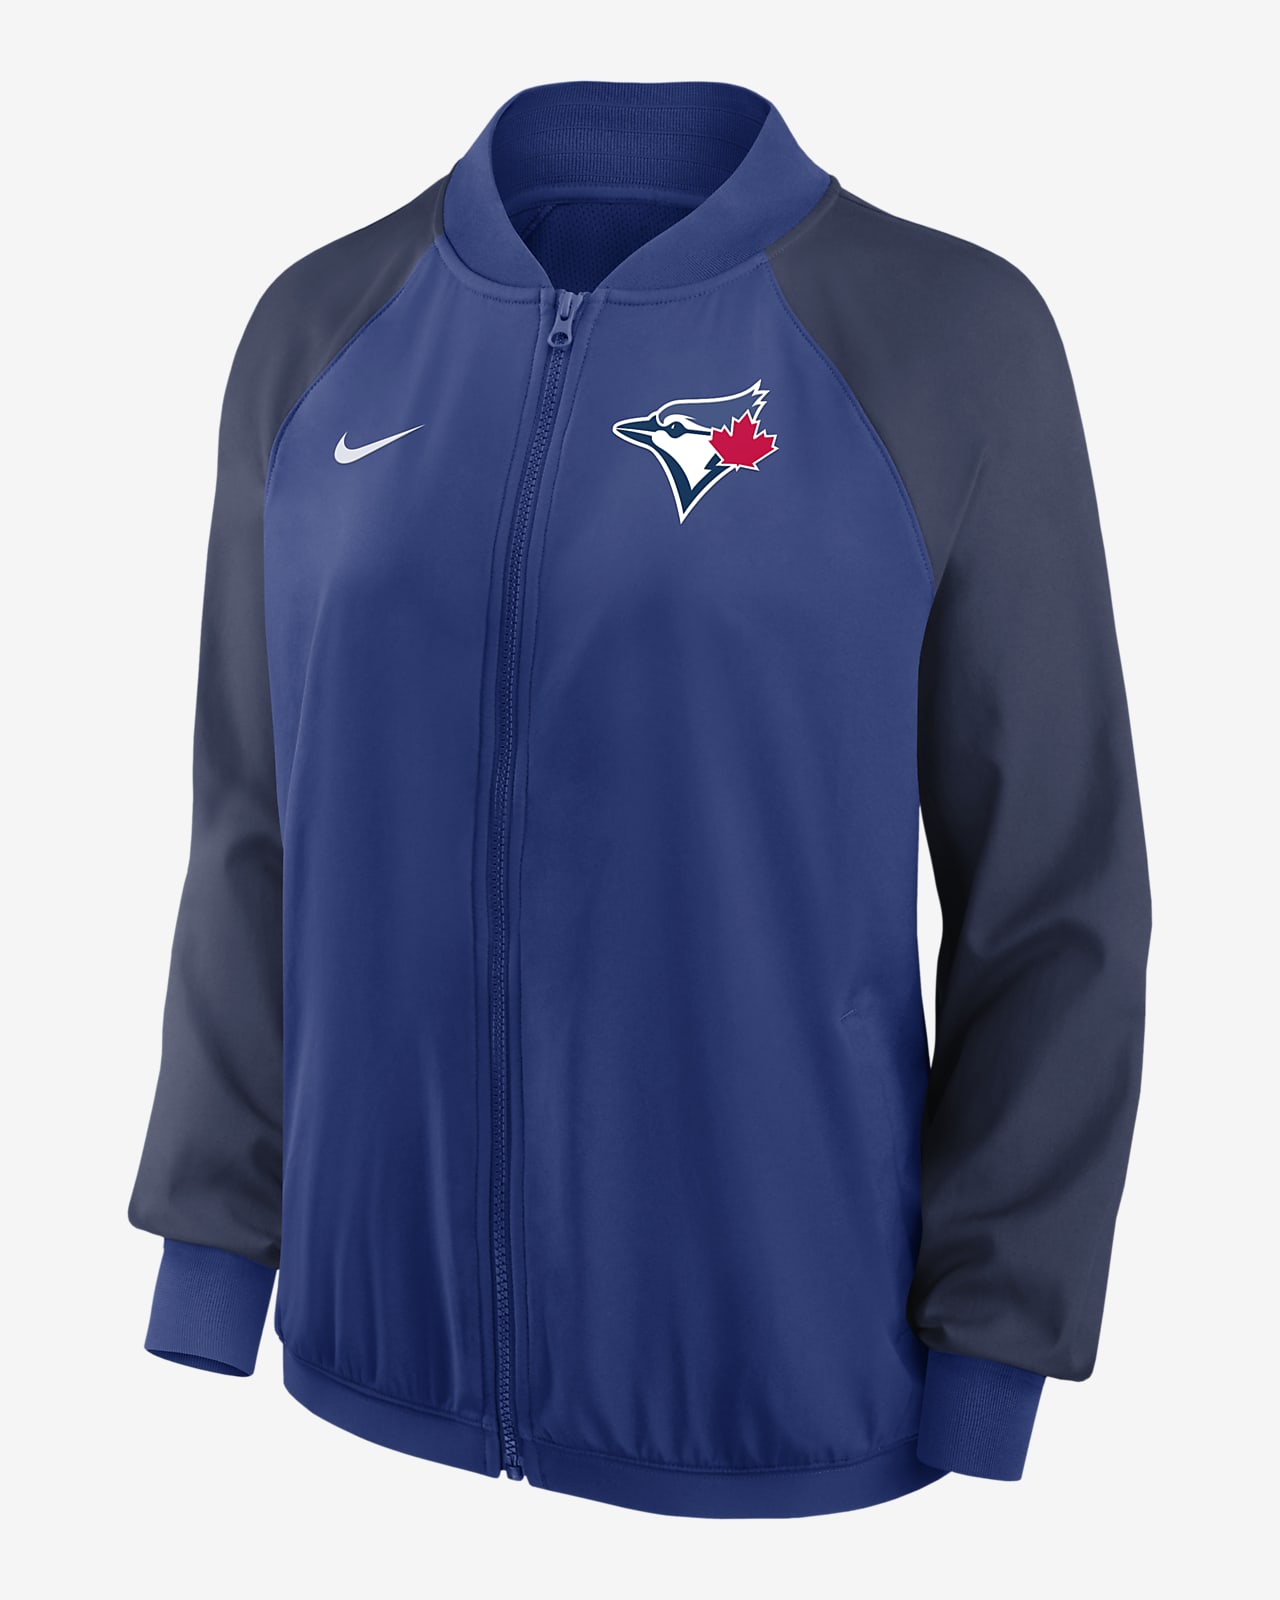 Nike Dri-FIT Team (MLB Toronto Blue Jays) Women's Full-Zip Jacket